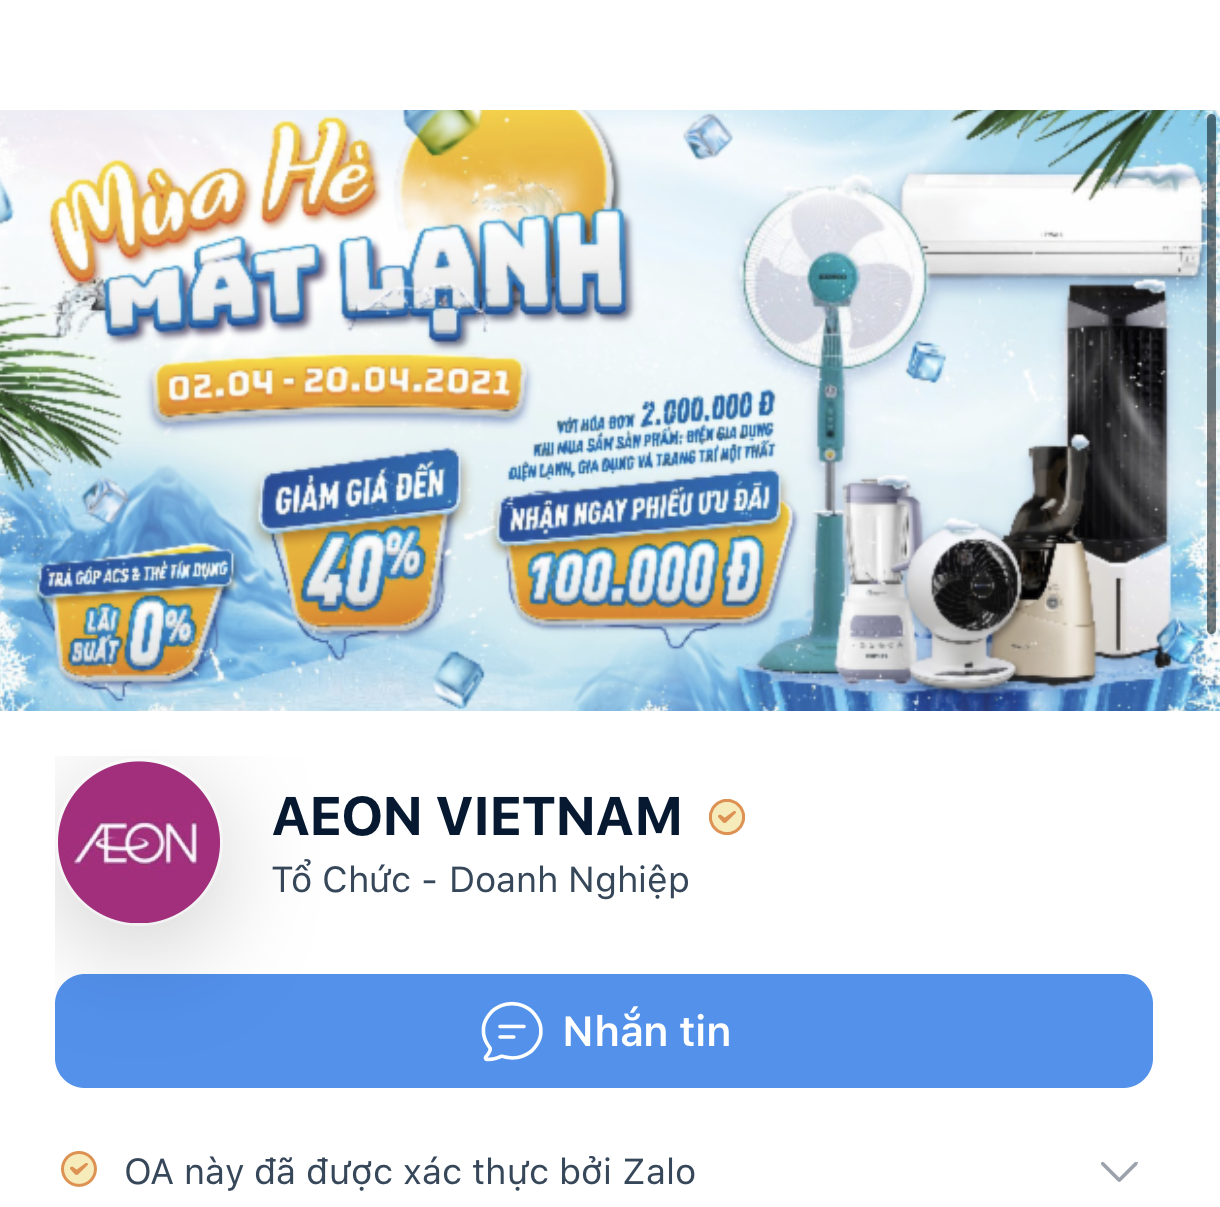 AEON Vietnam's Zalo Official Account